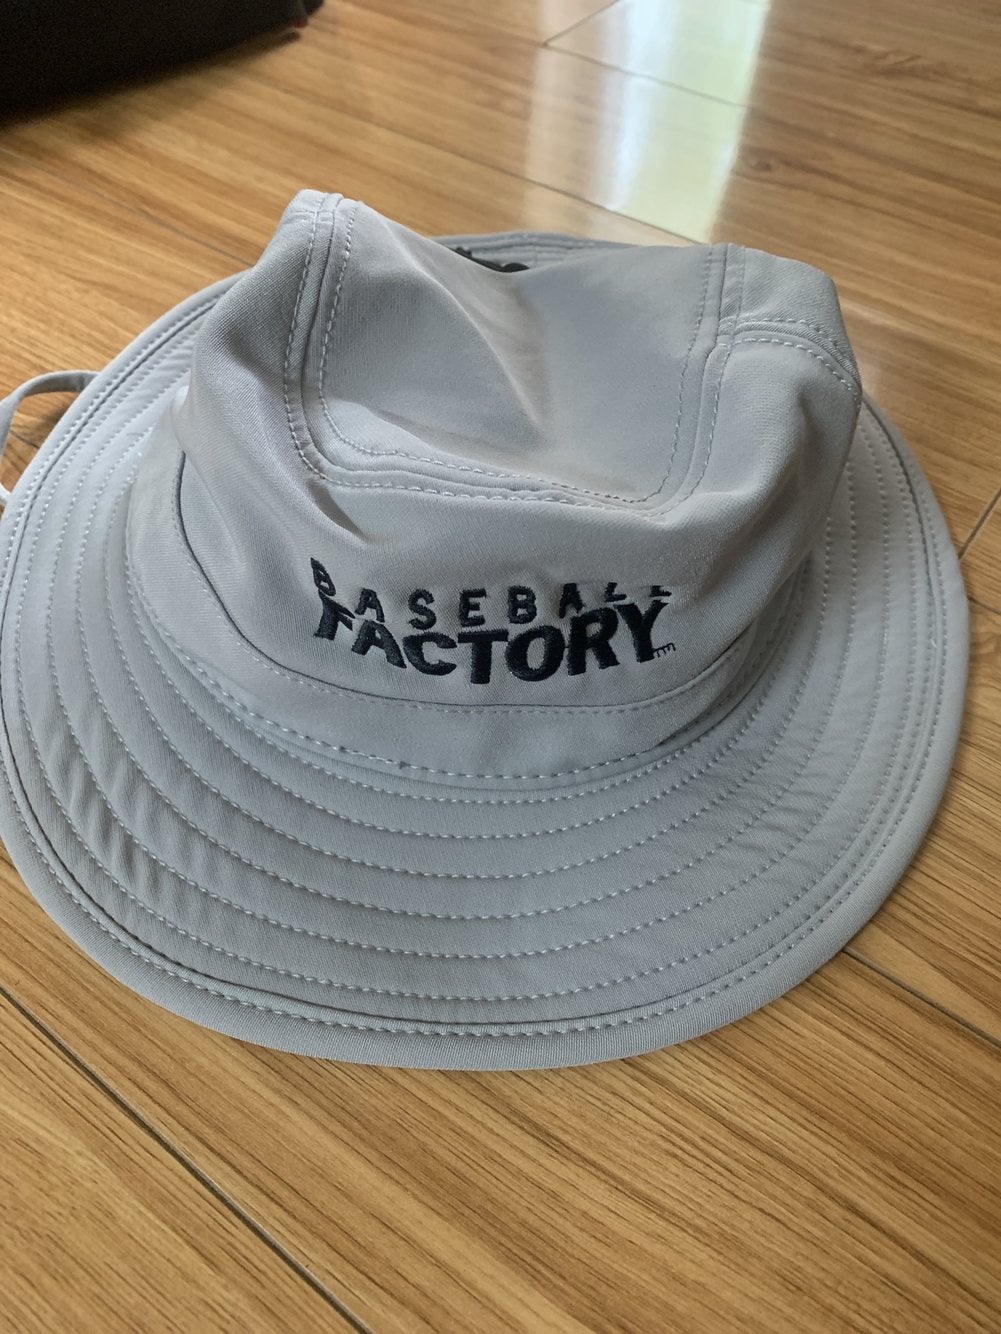 Baseball Factory Bucket Hat